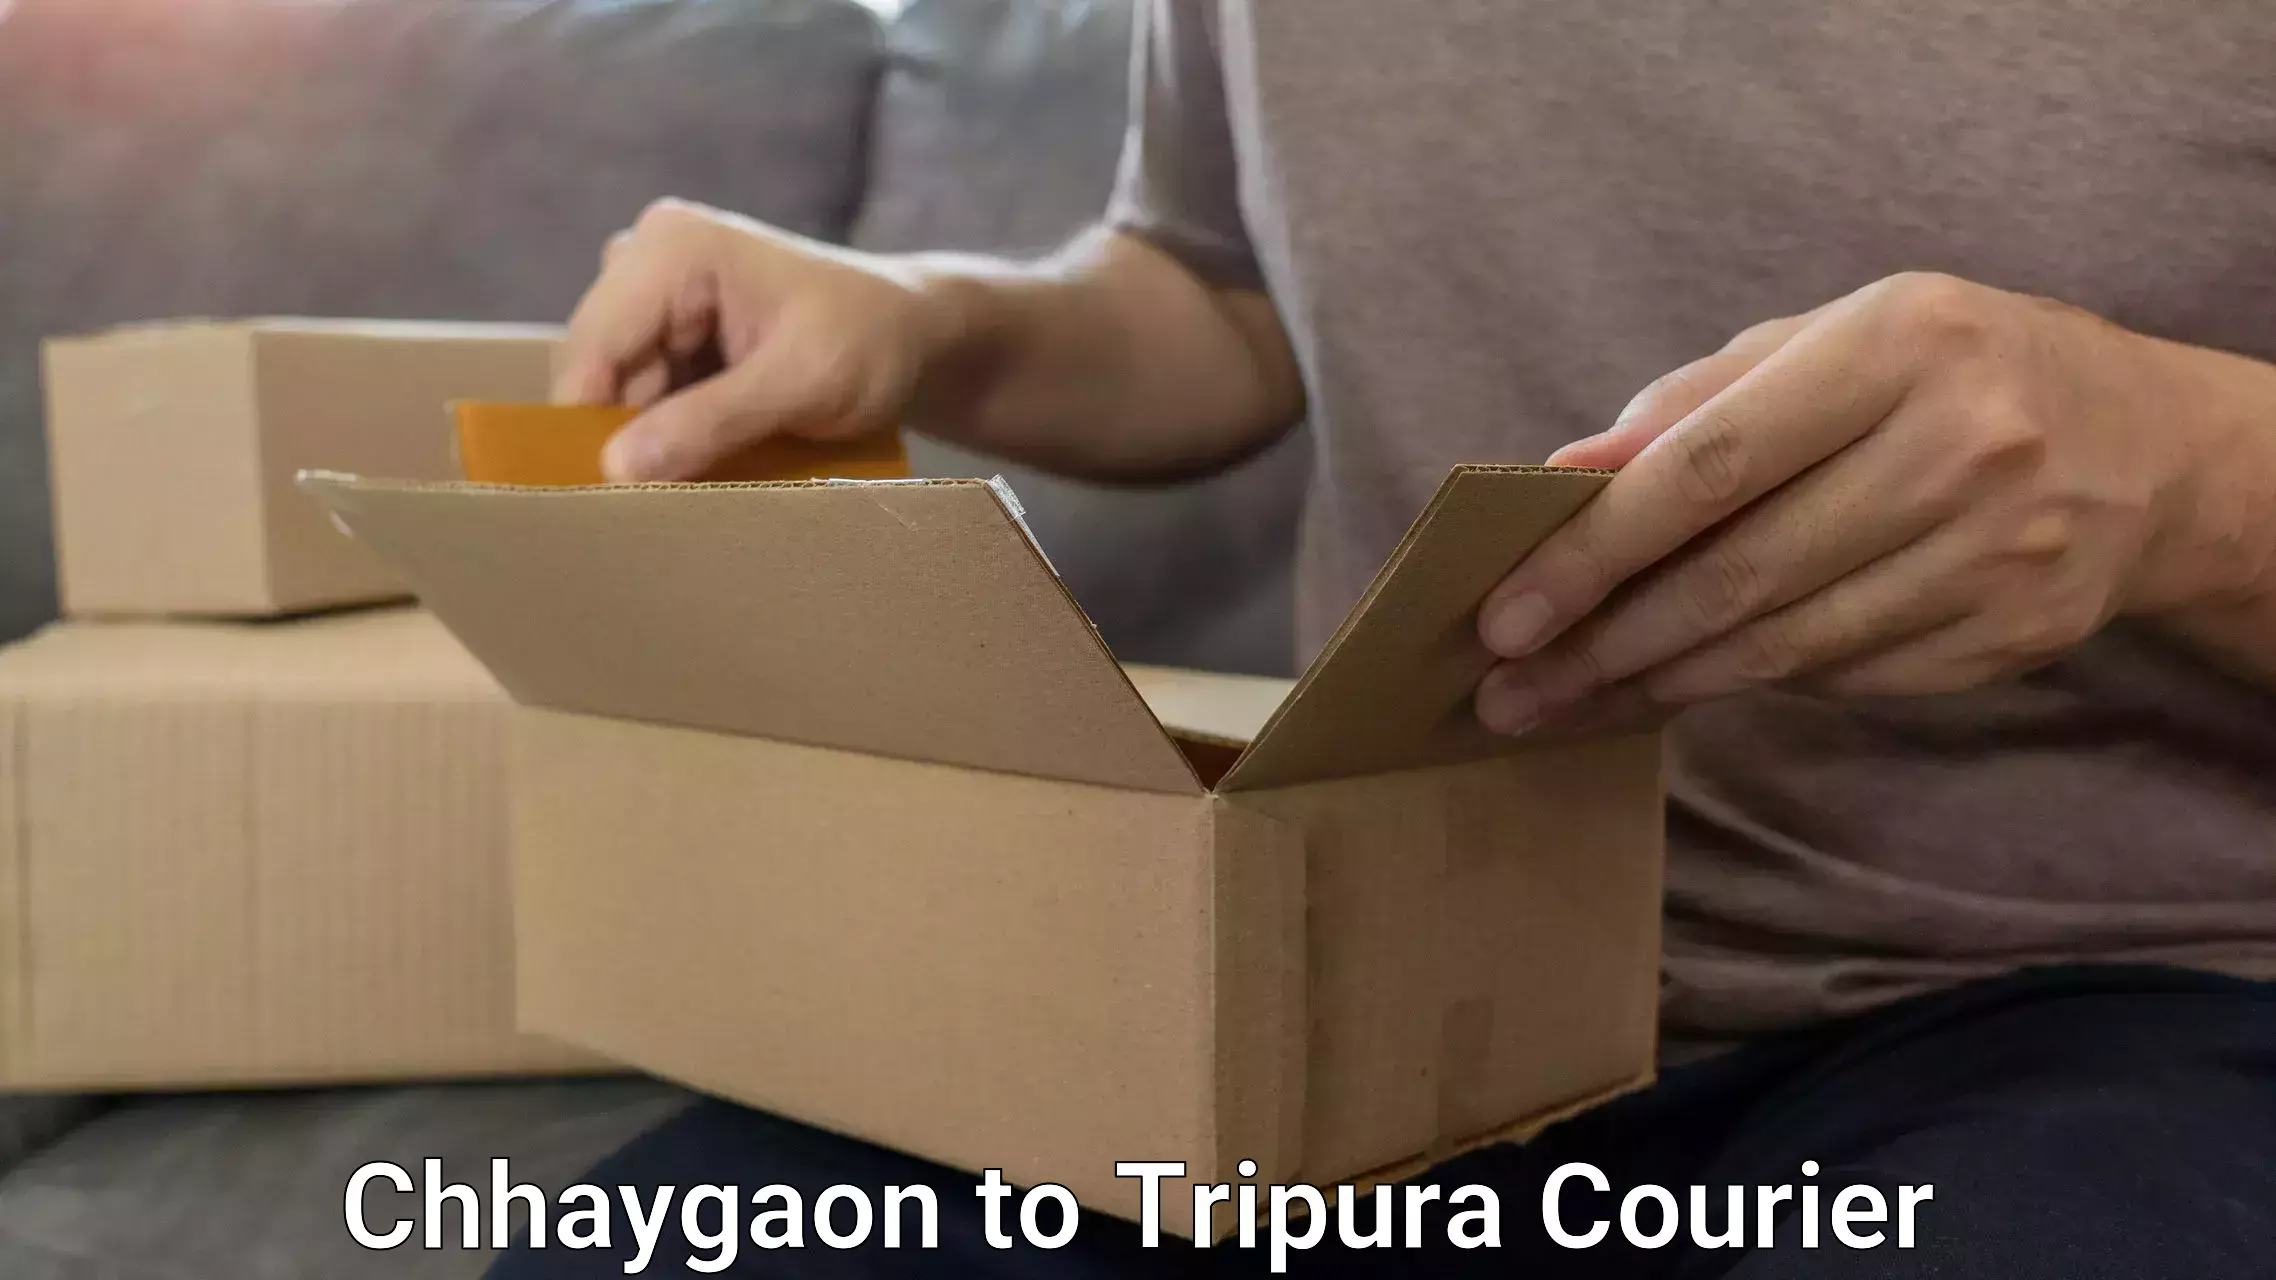 Luggage transfer service Chhaygaon to Udaipur Tripura